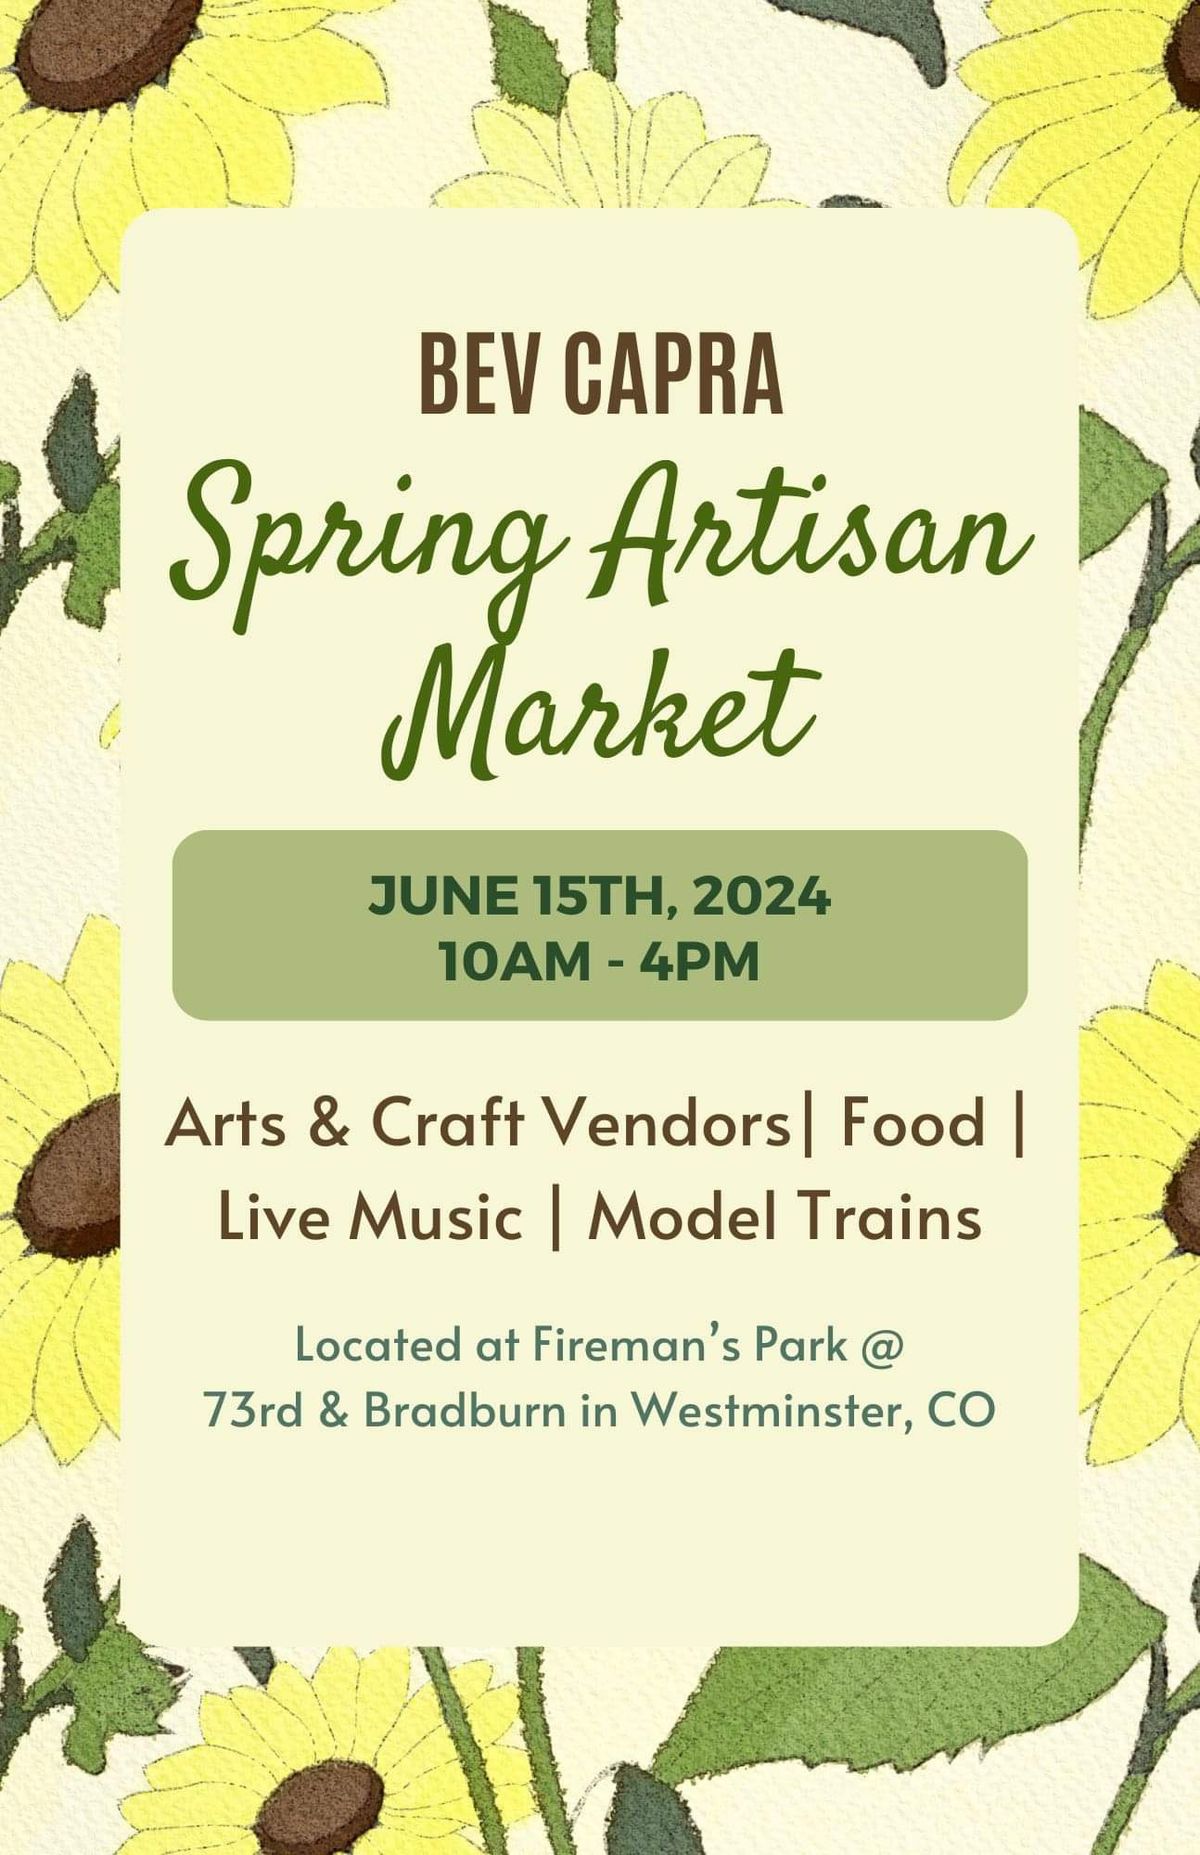 Bev Capra Spring Artisan Market